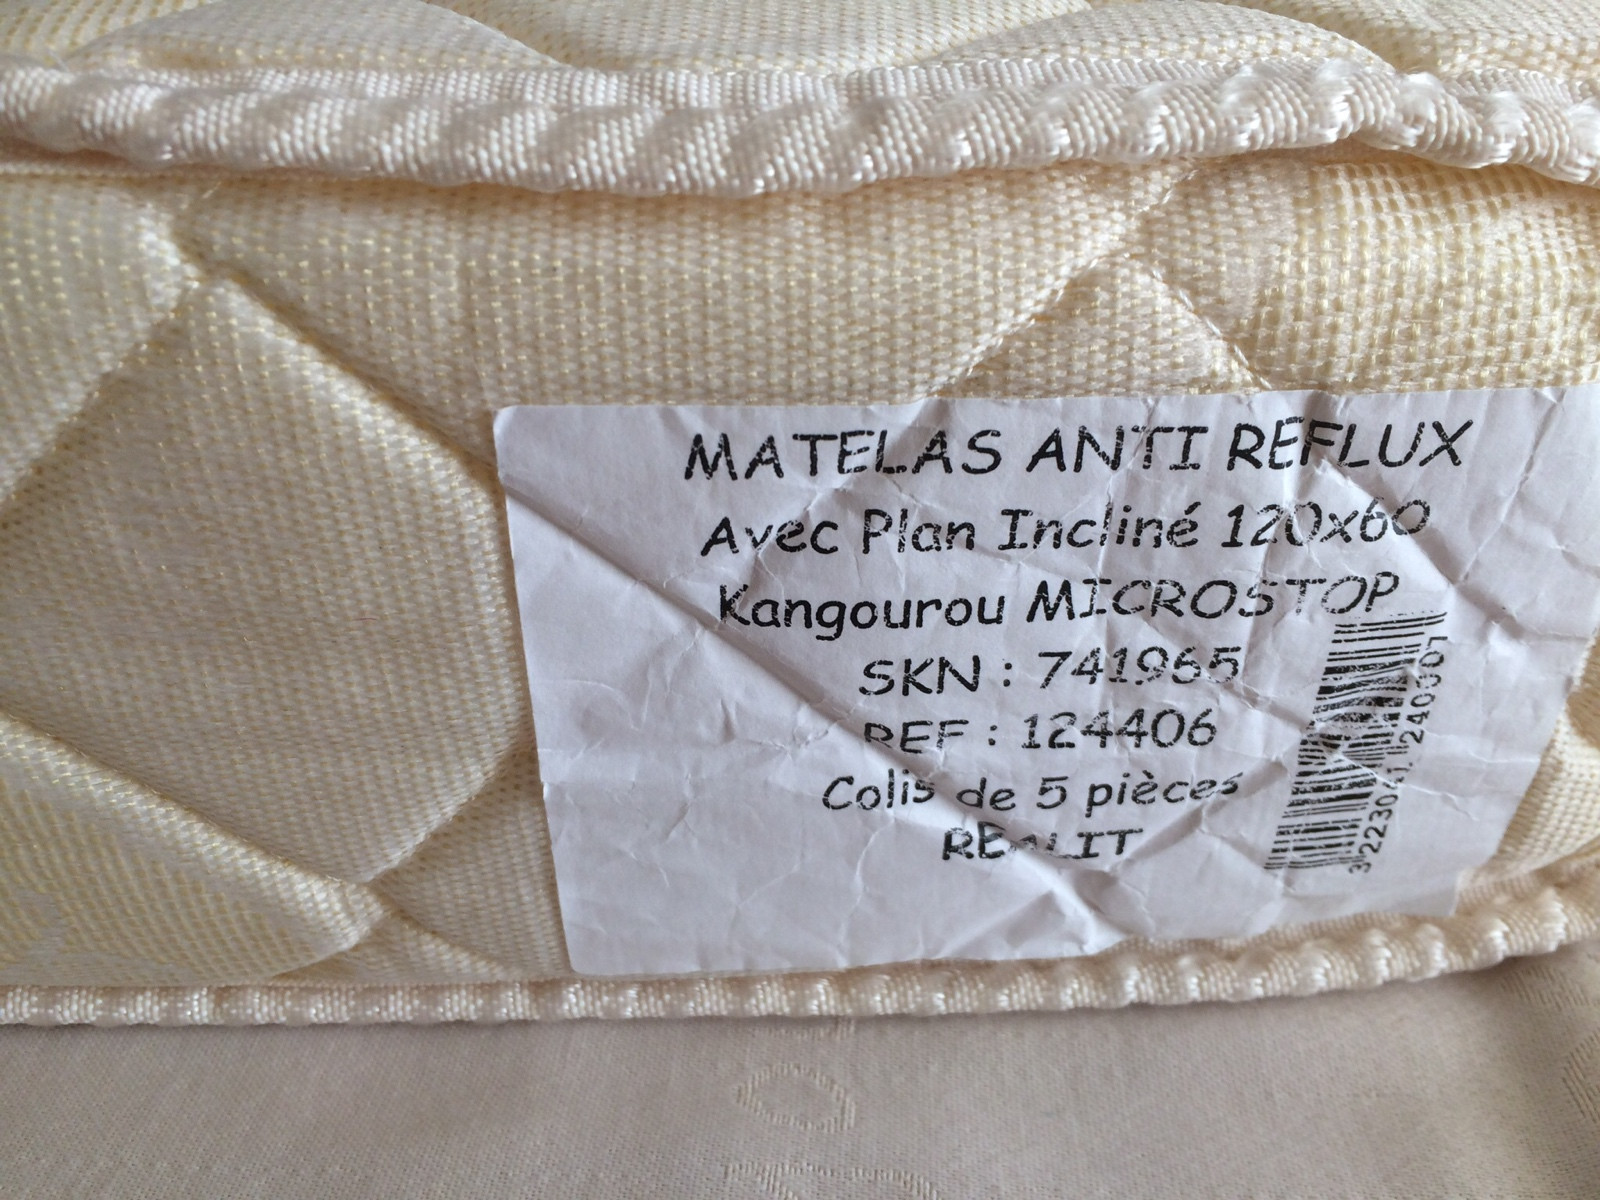 Matelas anti reflux coton bio 140x70